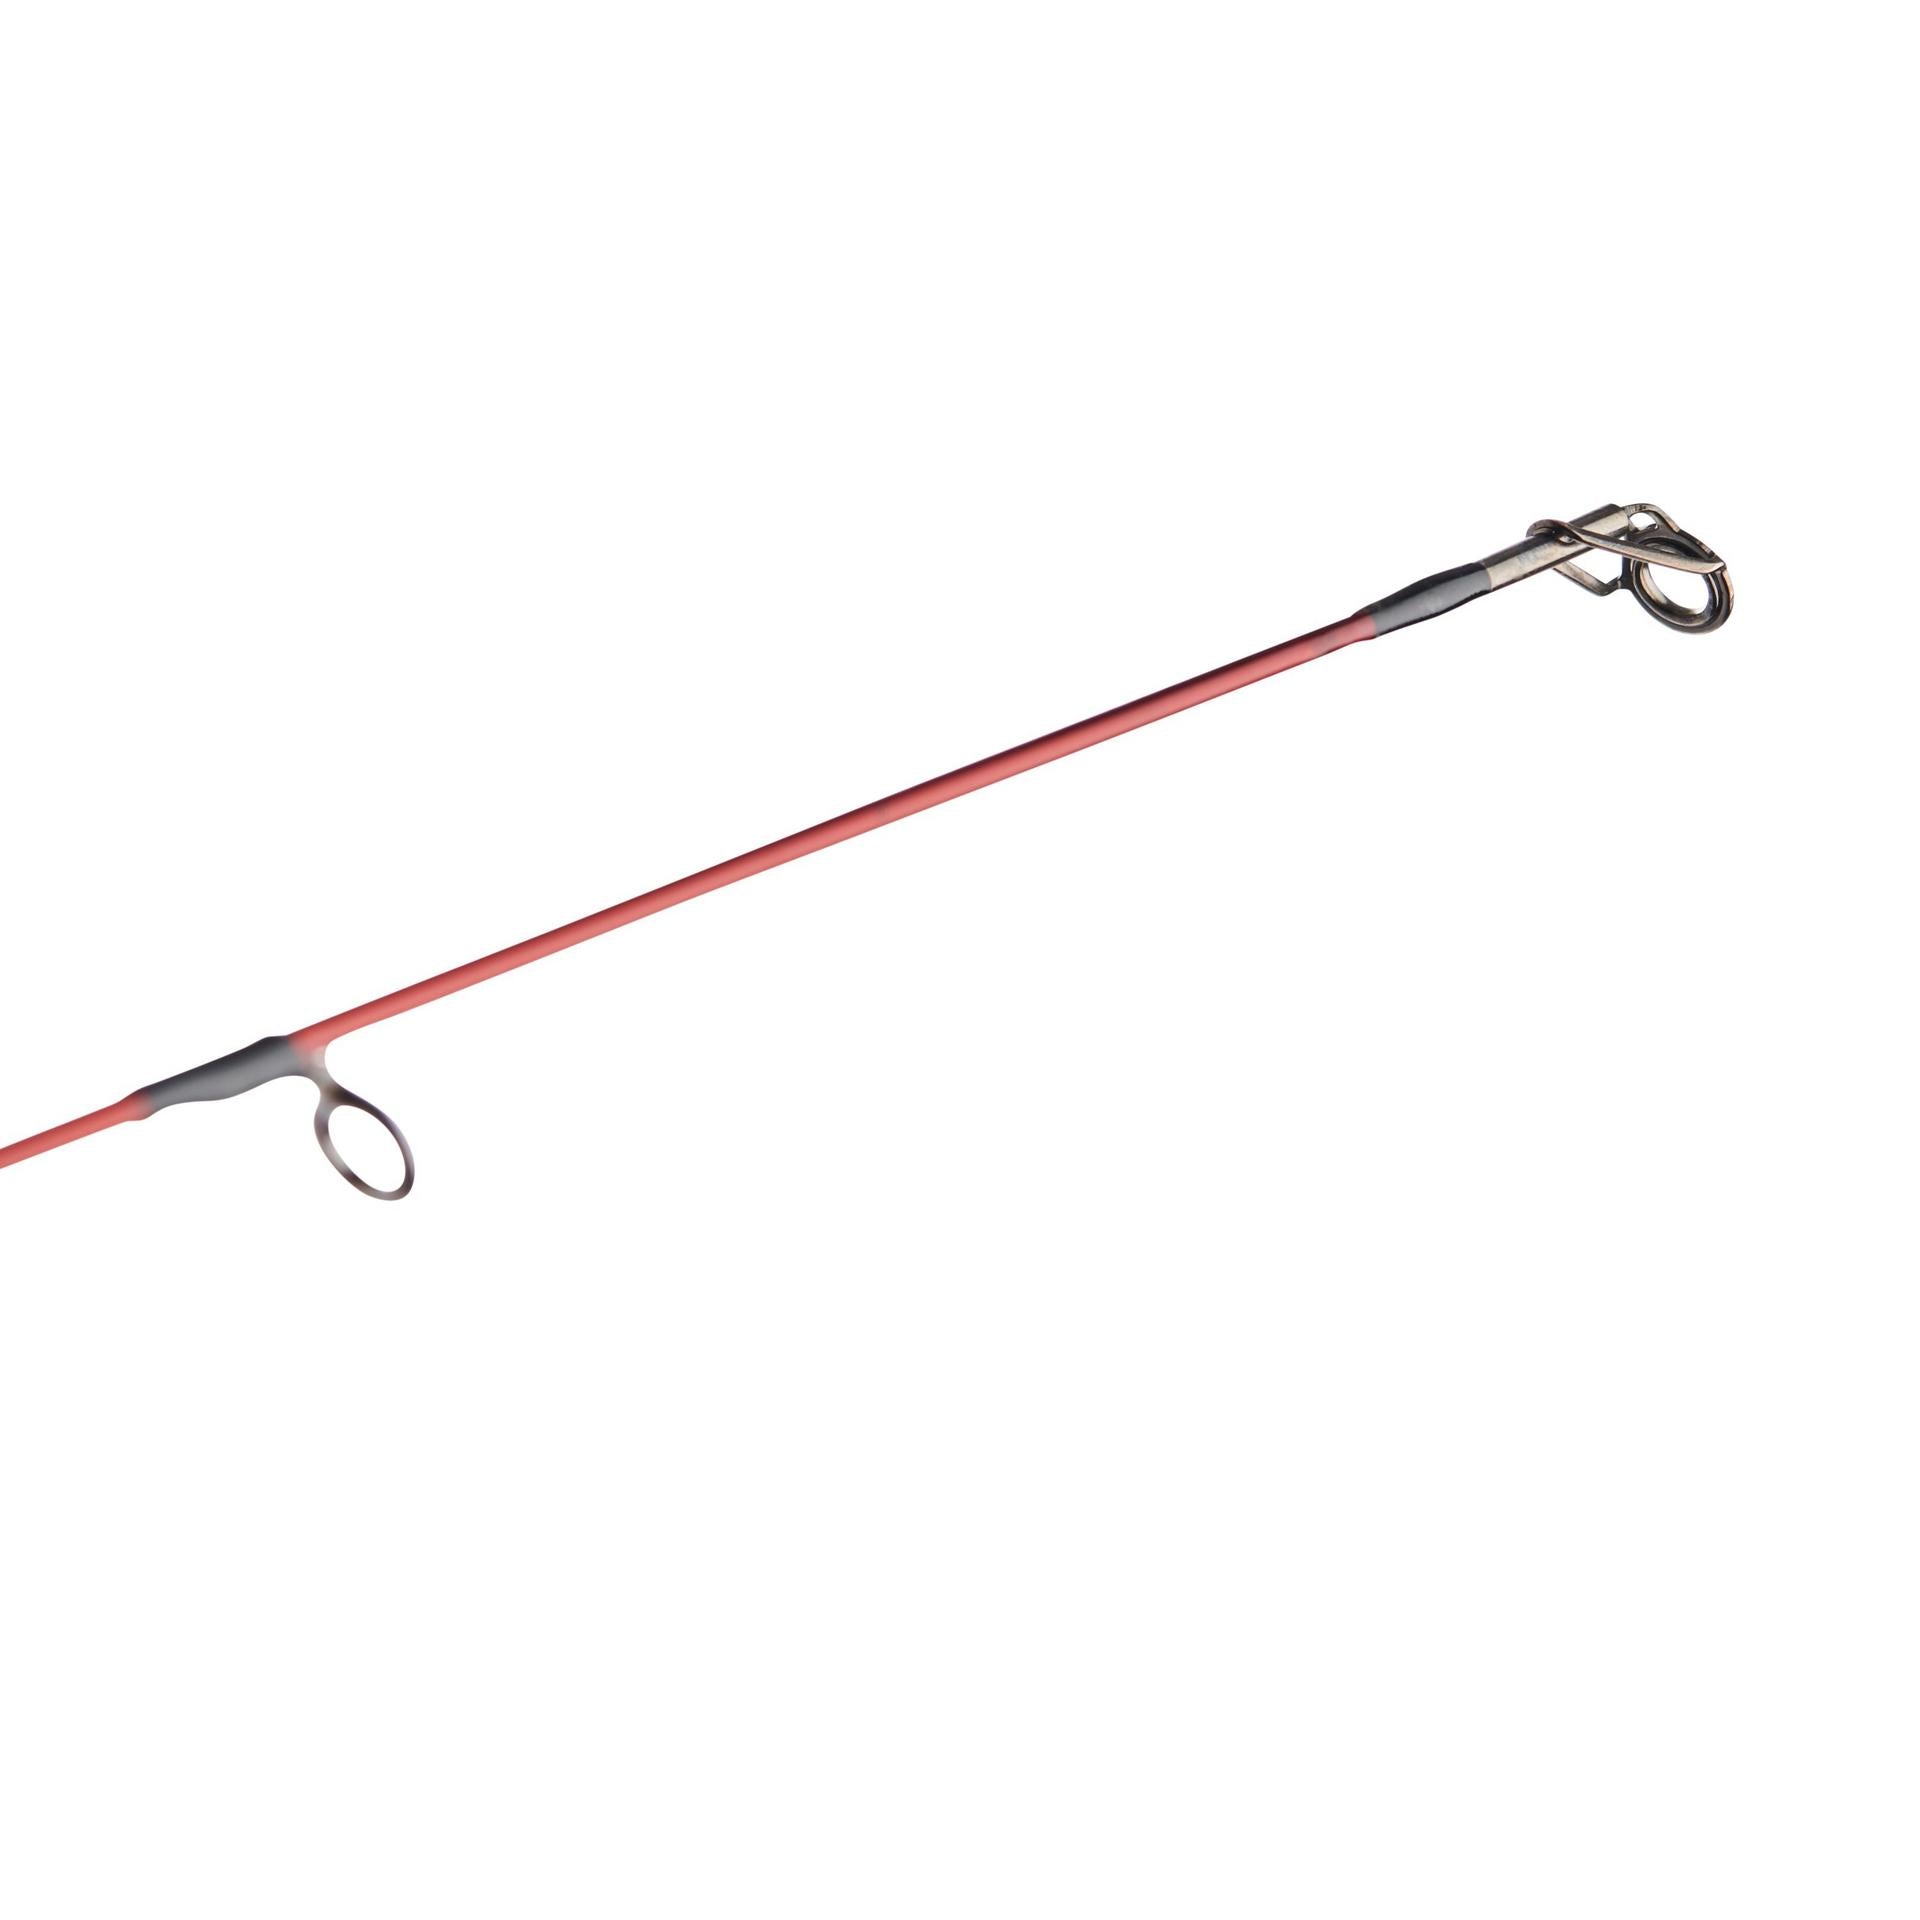 Abu Garcia Red Max Spinning Reel - Lightweight, Durable Fishing Reel